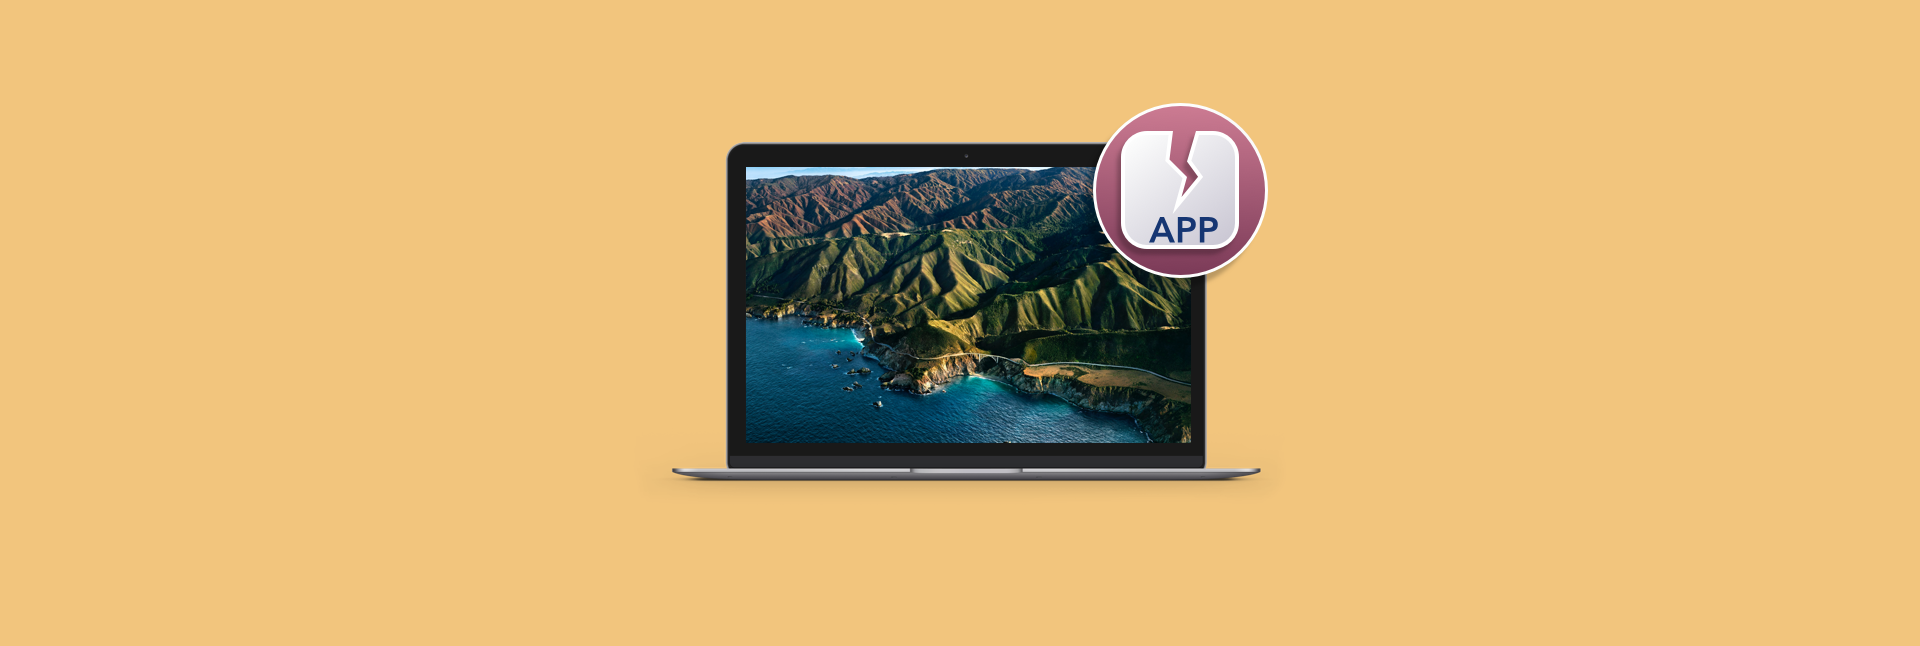 Mac paprika app crashes windows 10